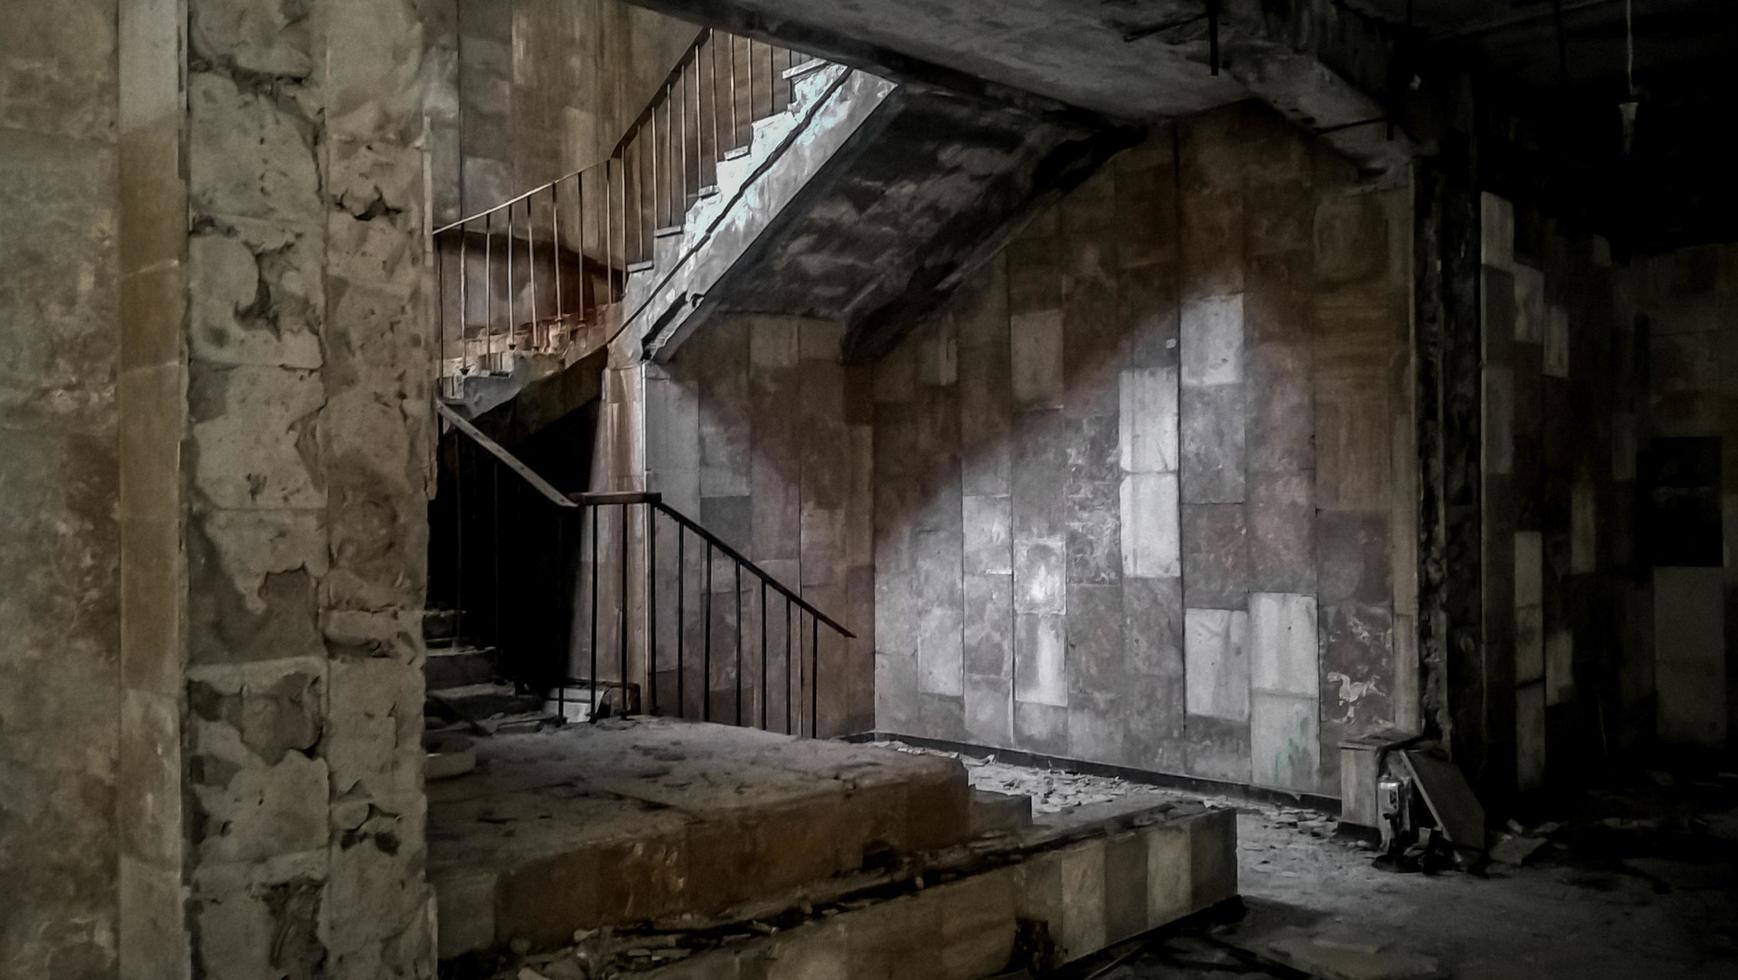 pripyat, oekraïne, 2021 - stenen trap in een verlaten gebouw in Tsjernobyl foto